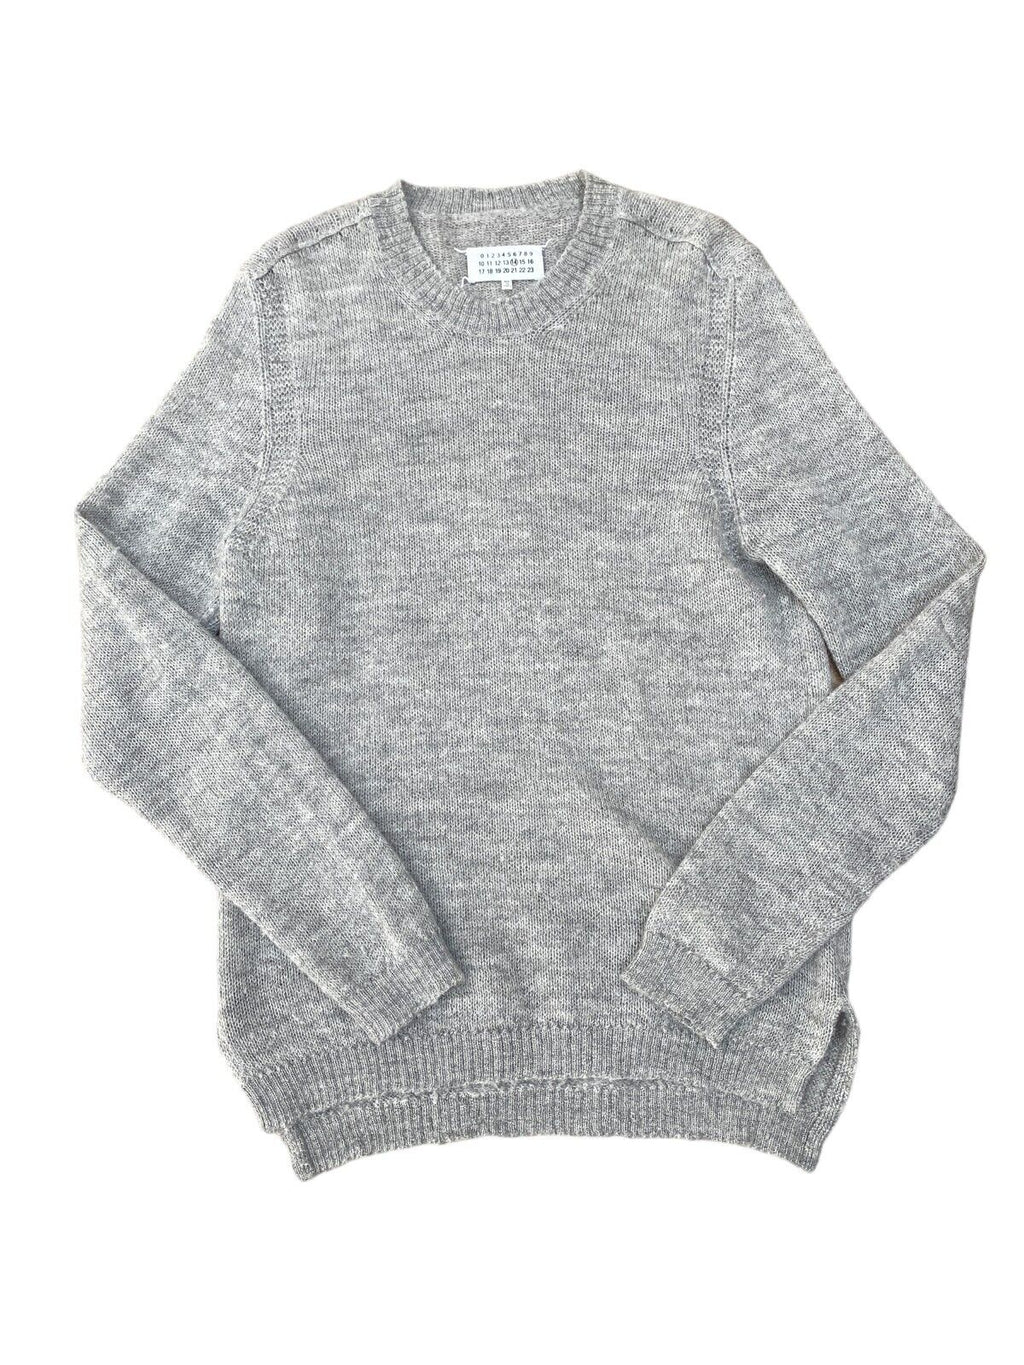 FW 2013 Grey Alpaca Sweater